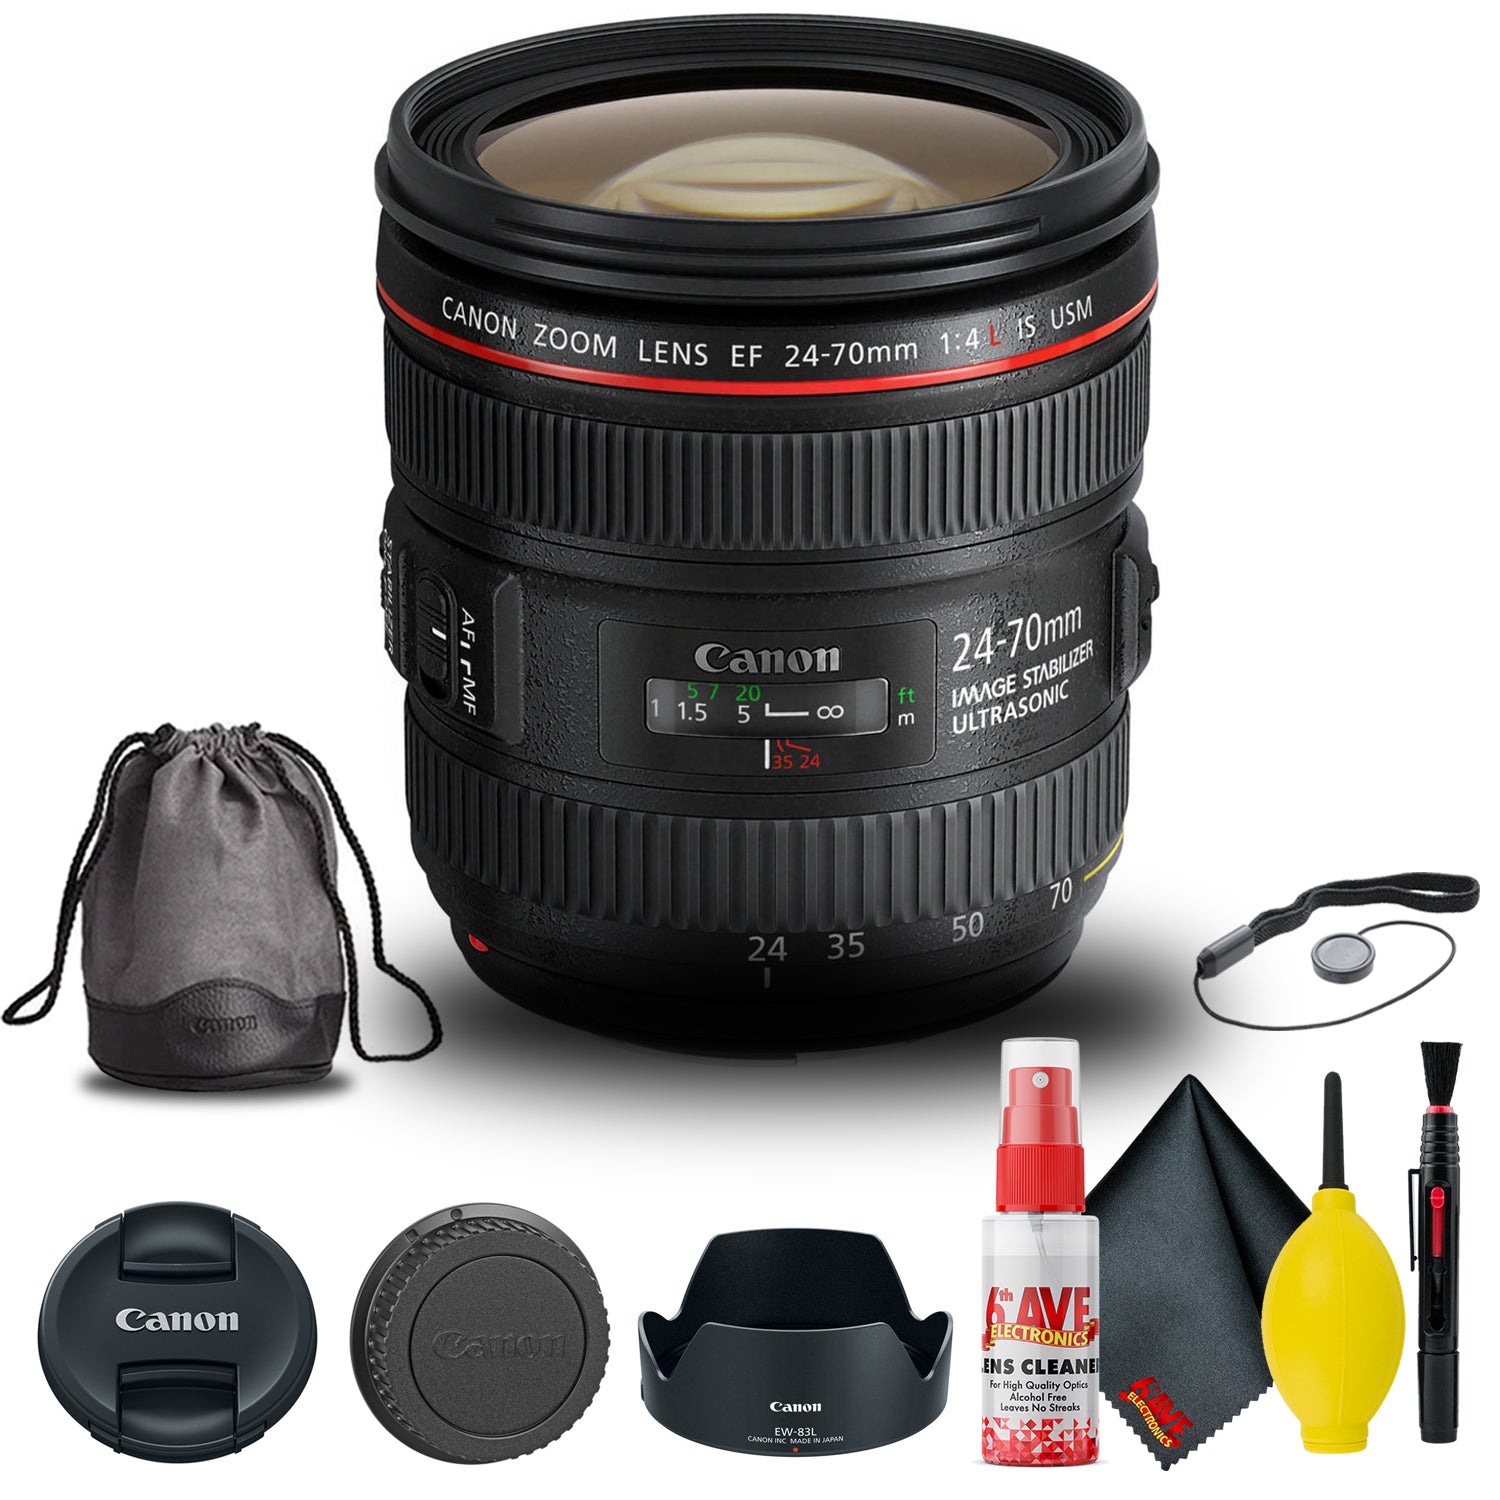 Canon EF 24-70mm f/4L IS USM Lens (6313B002) + Filter Kit + Cap Keeper + More